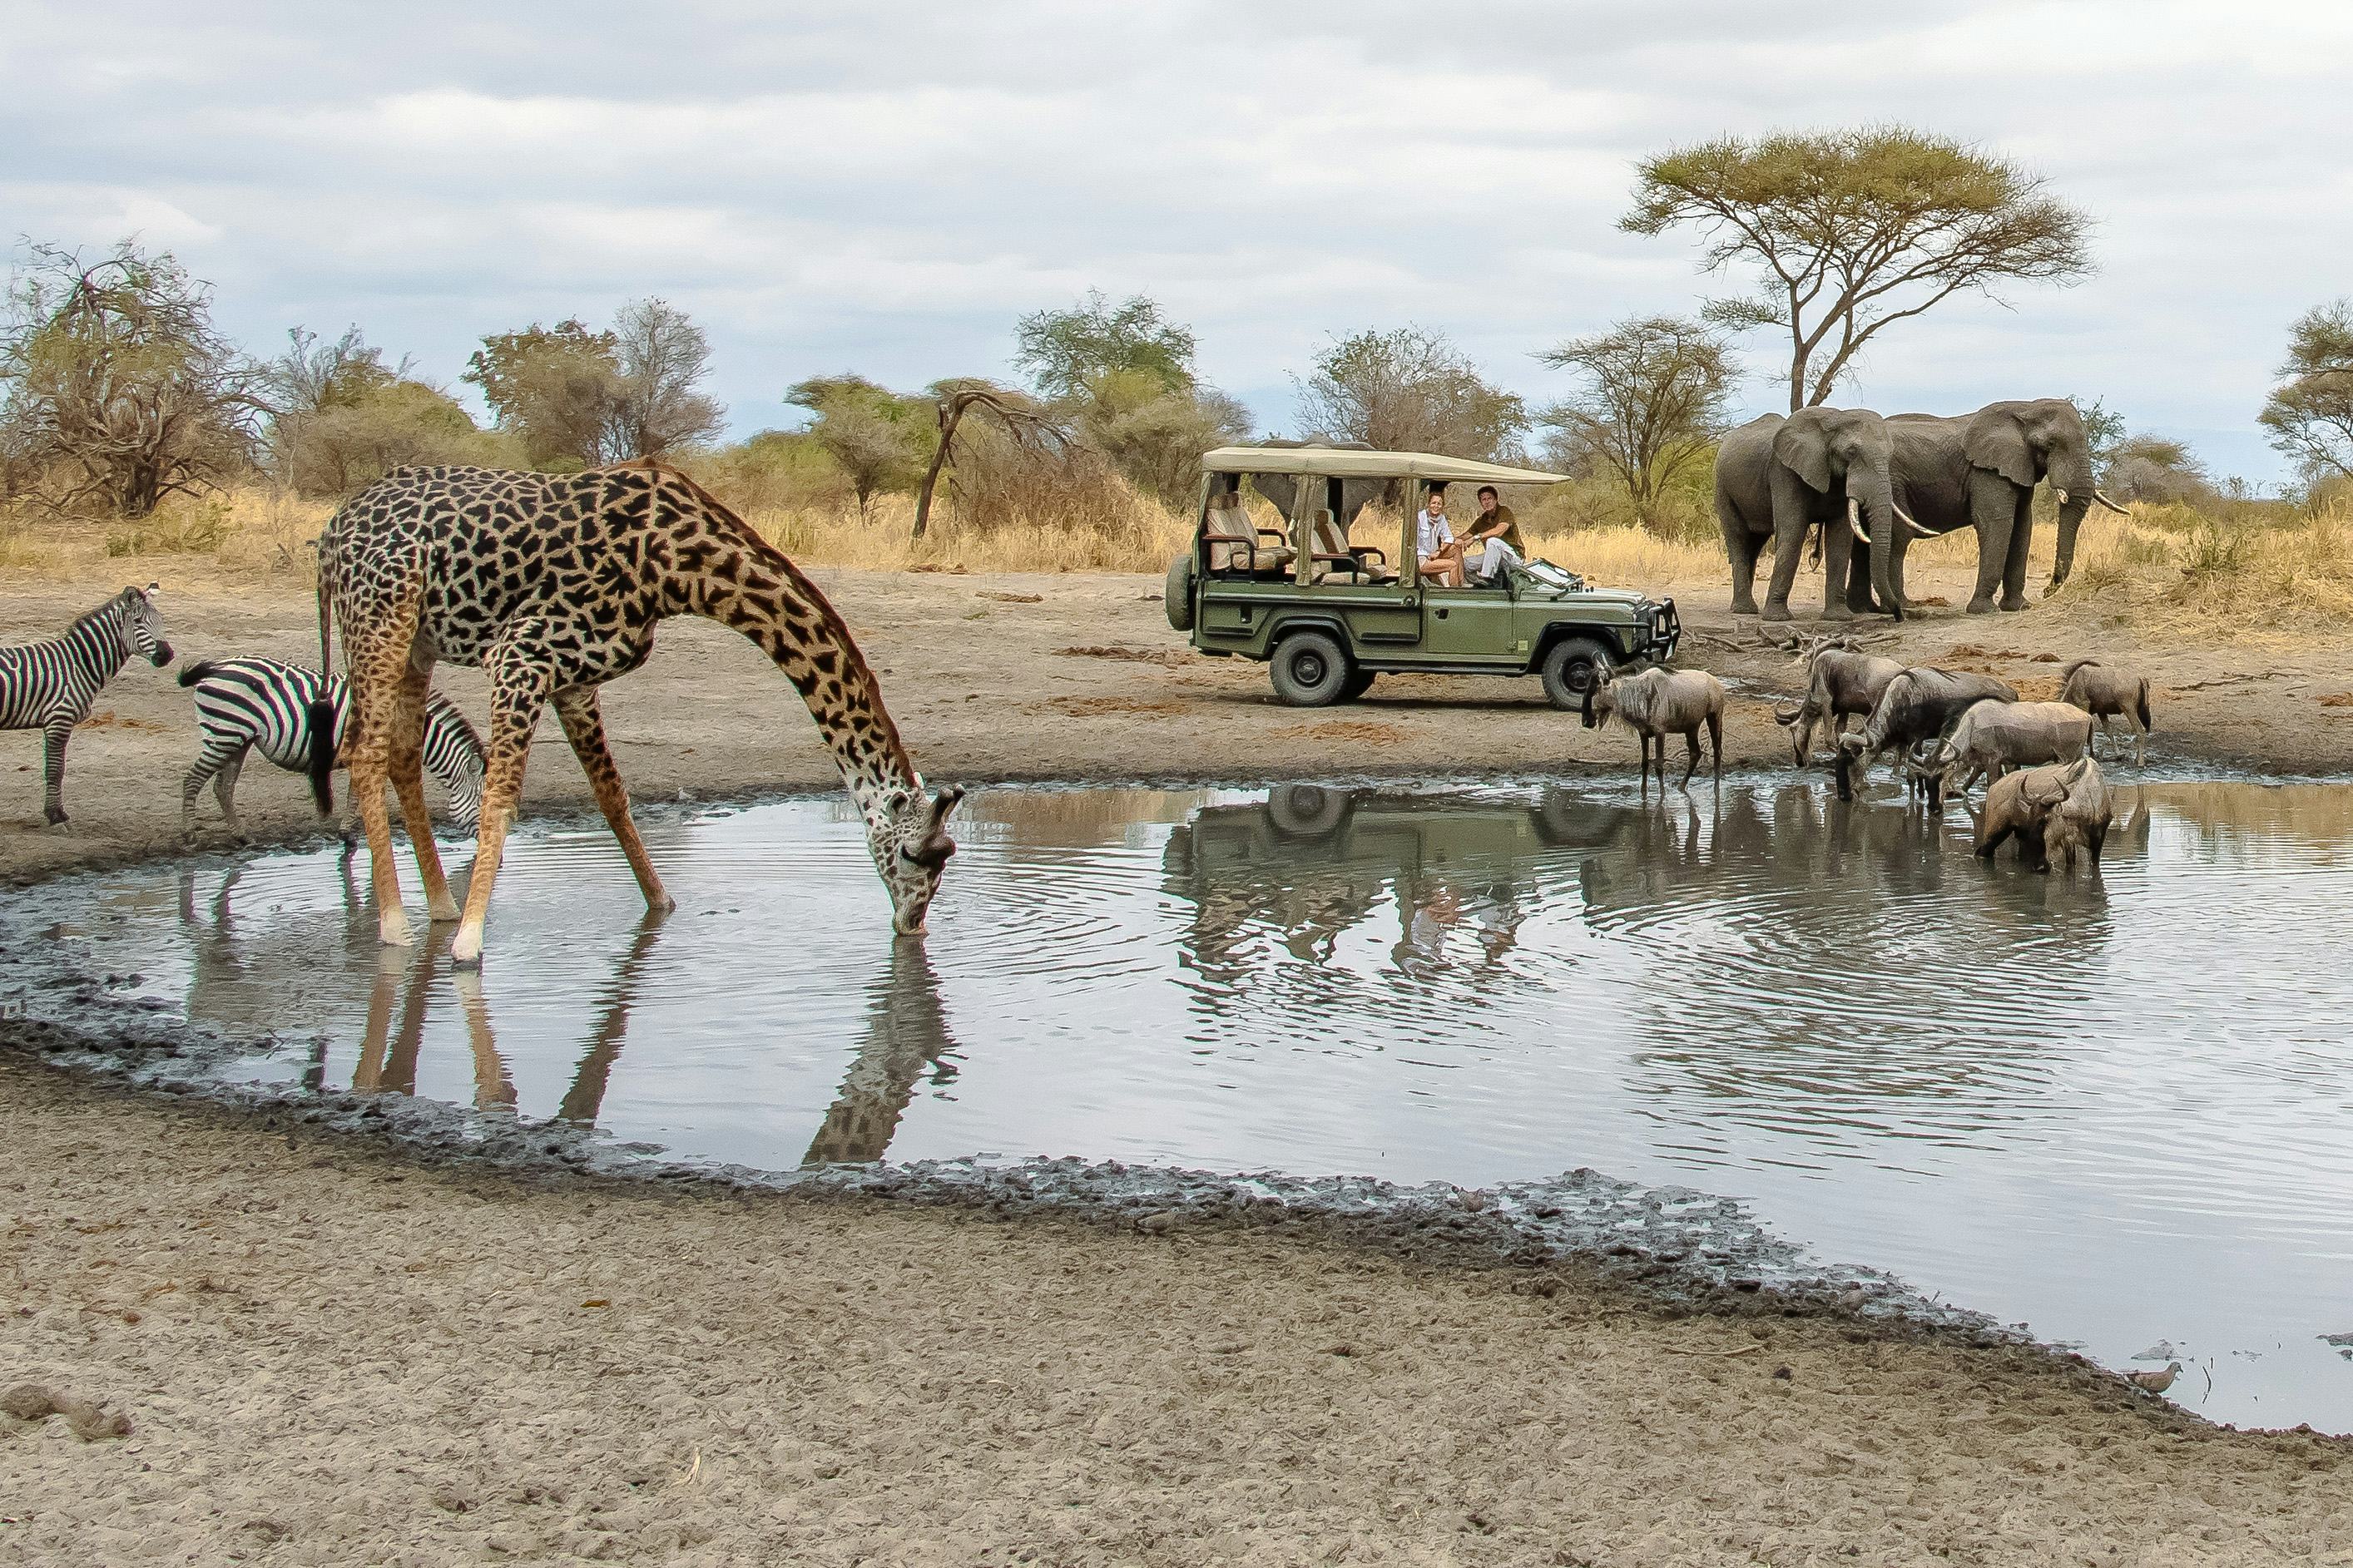 Plan an affordable Tanzania safari